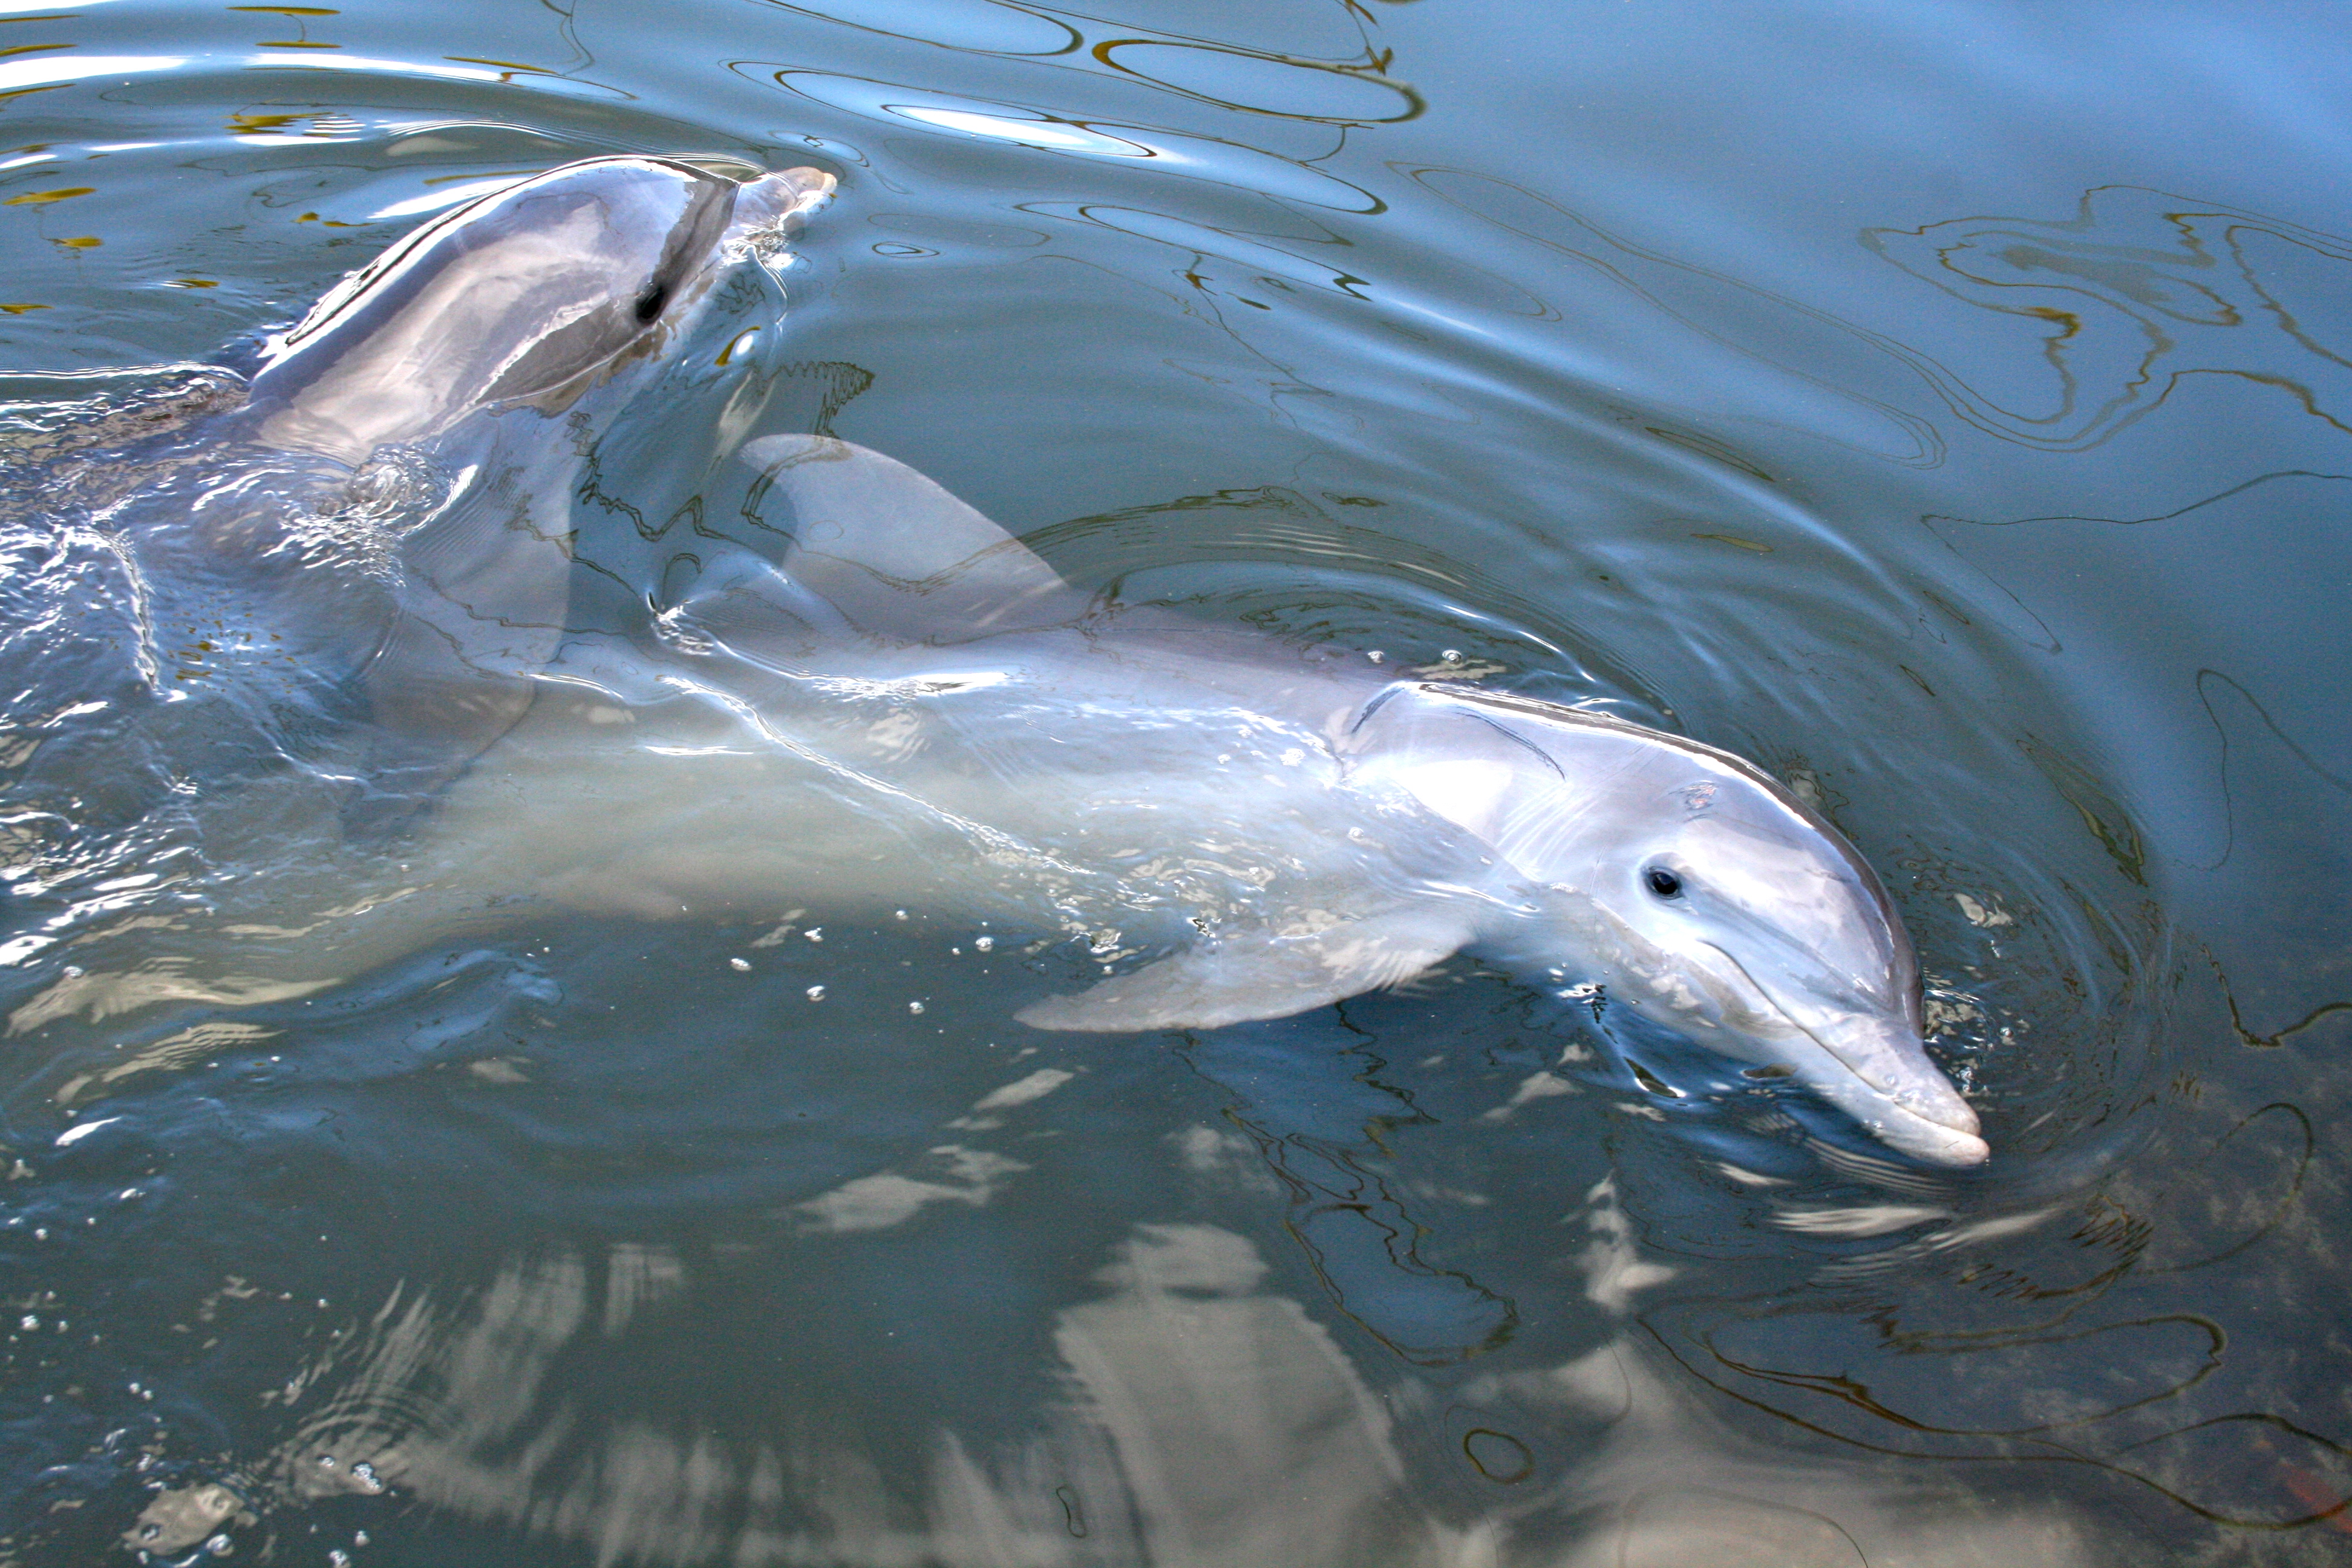 Dolphins play and swim at Varadero's Delfinario